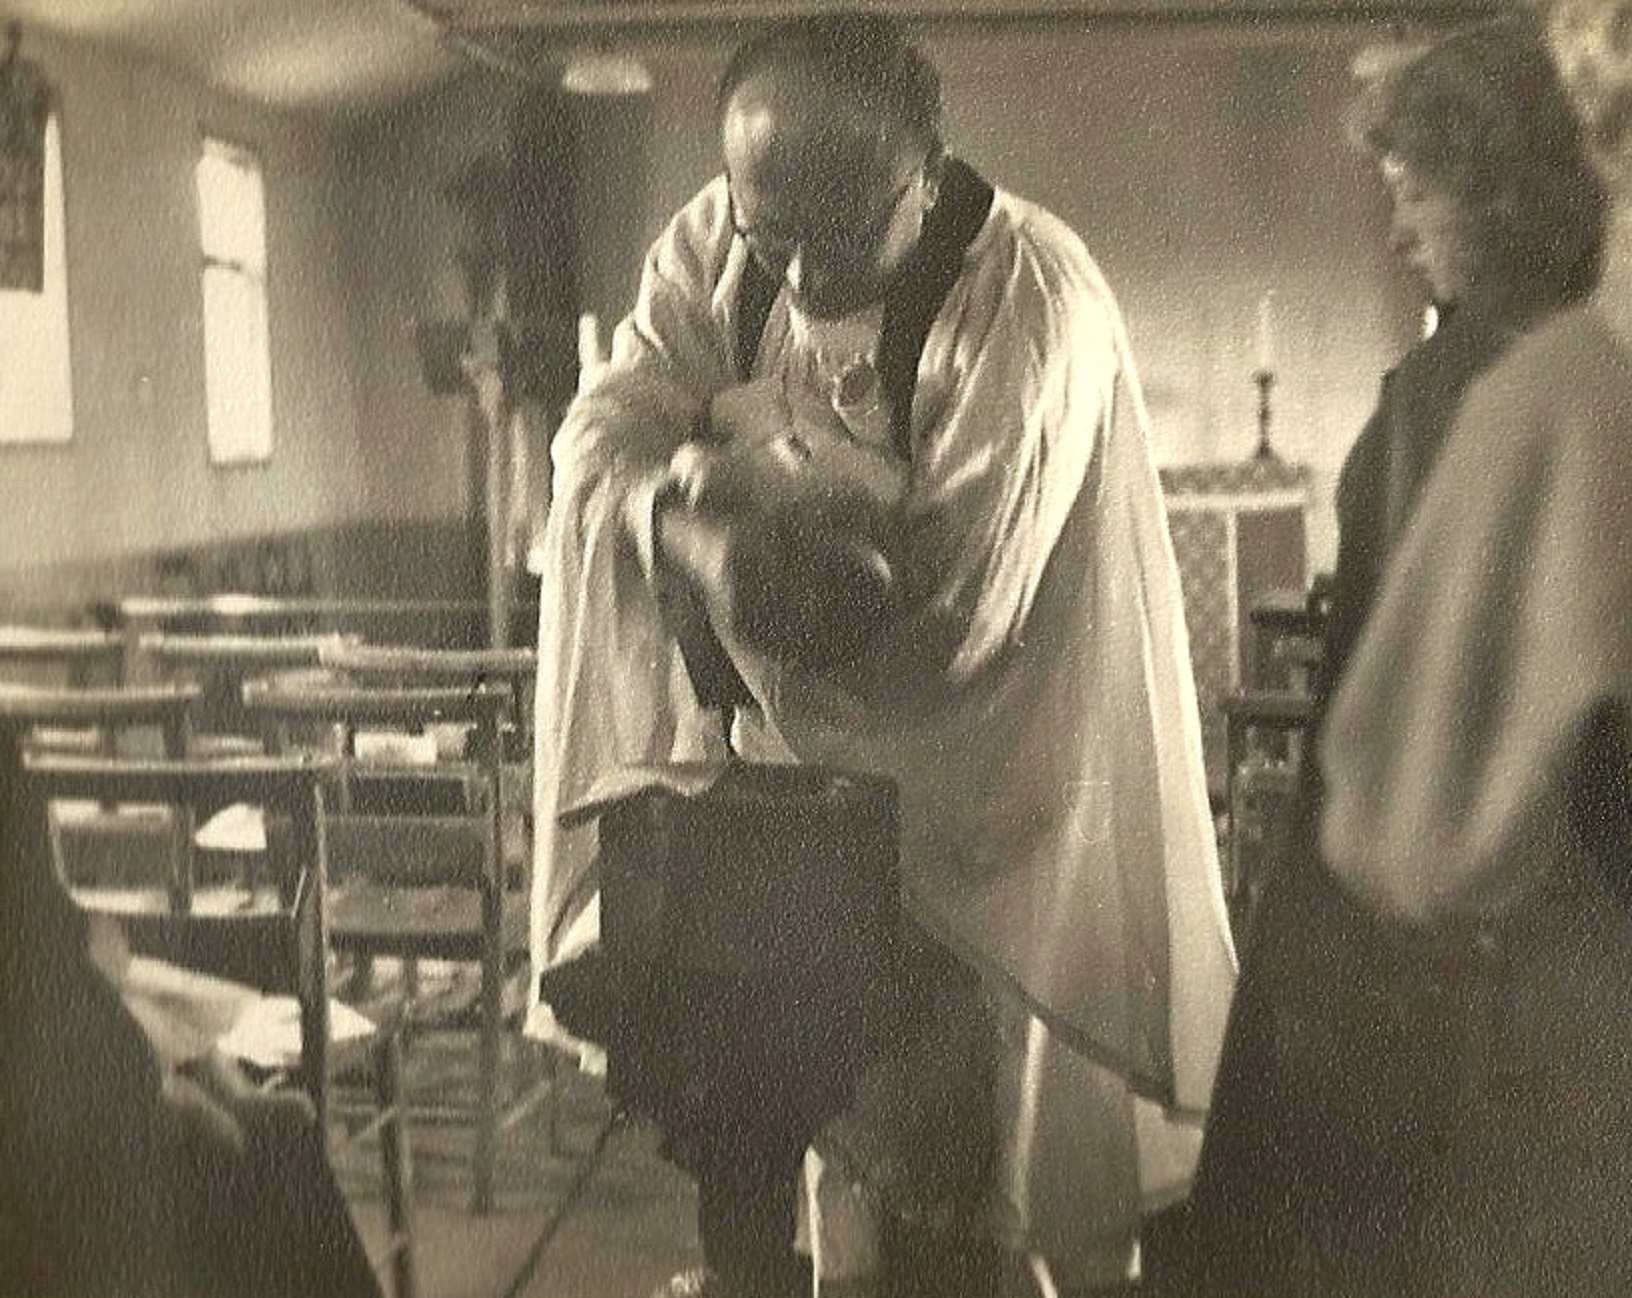 A Brine family baby being baptised at St Mark's Church, nicknamed "The Prefab Church"